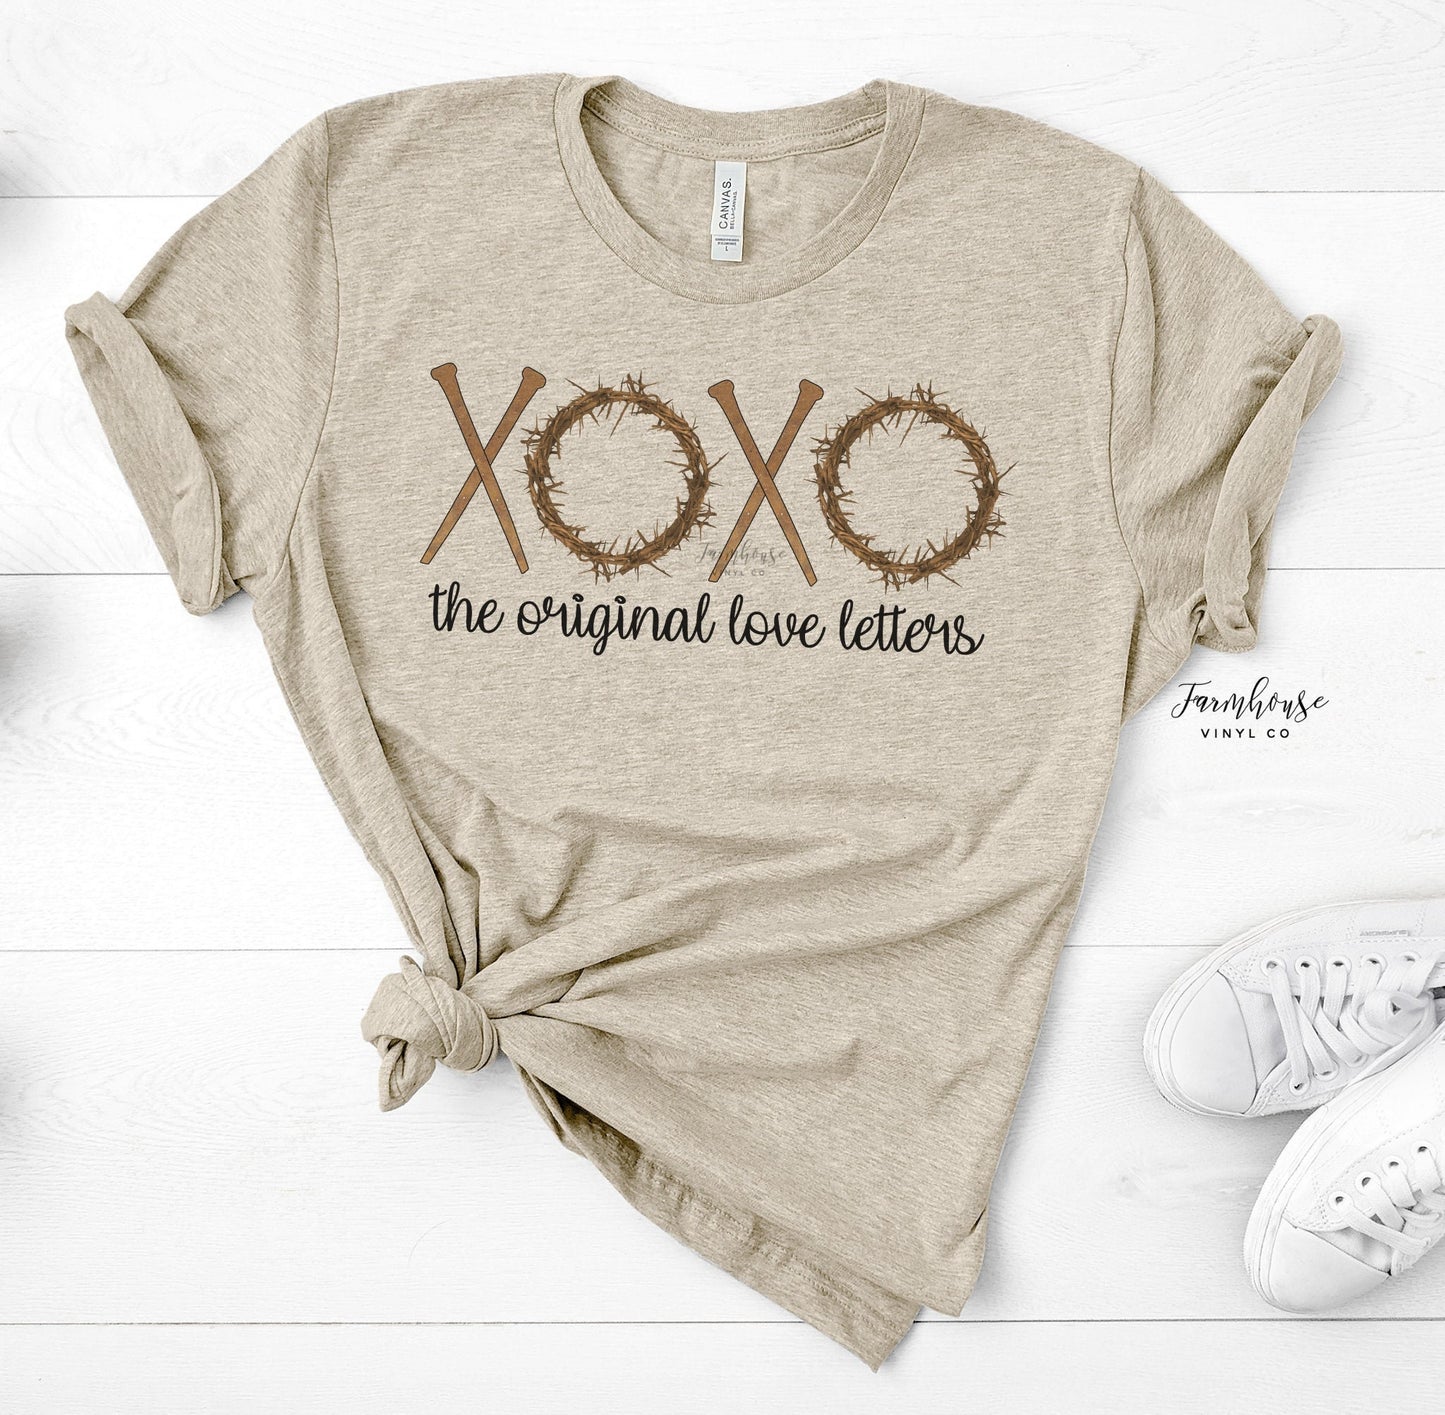 XOXO Original Love Letters Easter Shirt / Trendy tee shirt / Kids Easter T Shirt / Easter Party / Christian Scripture Shirt - Farmhouse Vinyl Co